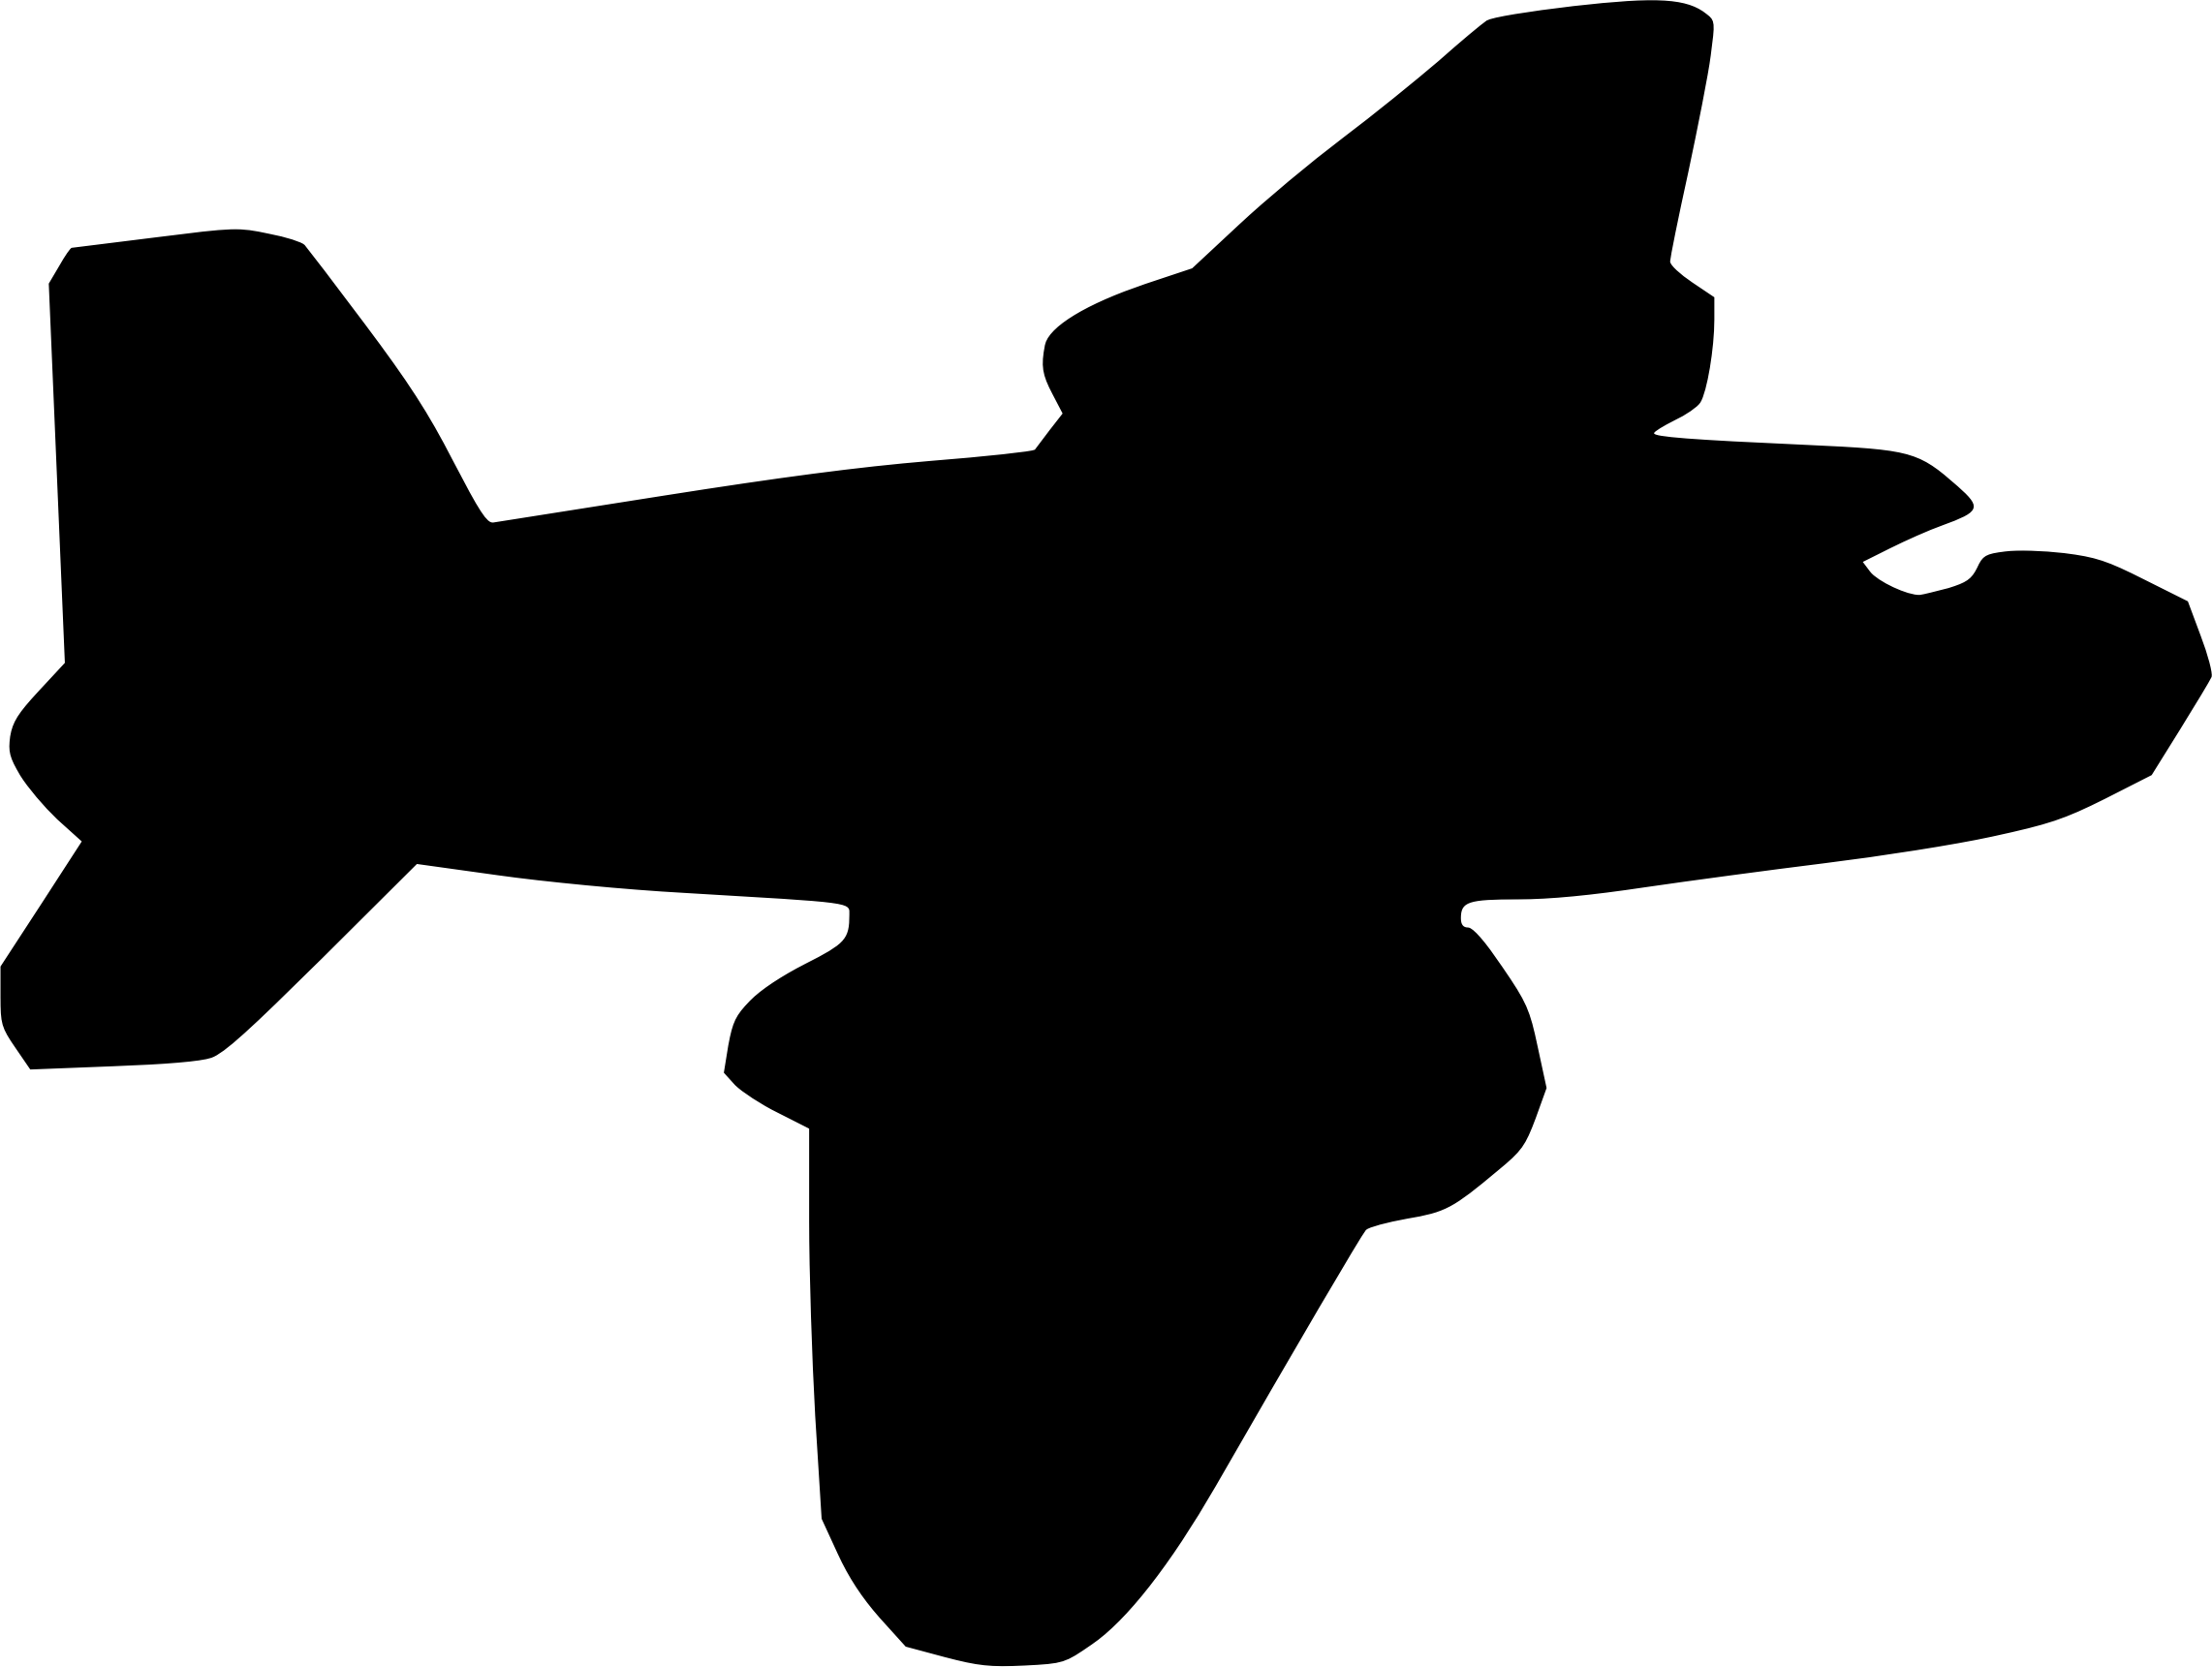 Airplane 1 - Nickelodeon Airplane Logo (2283x1721)